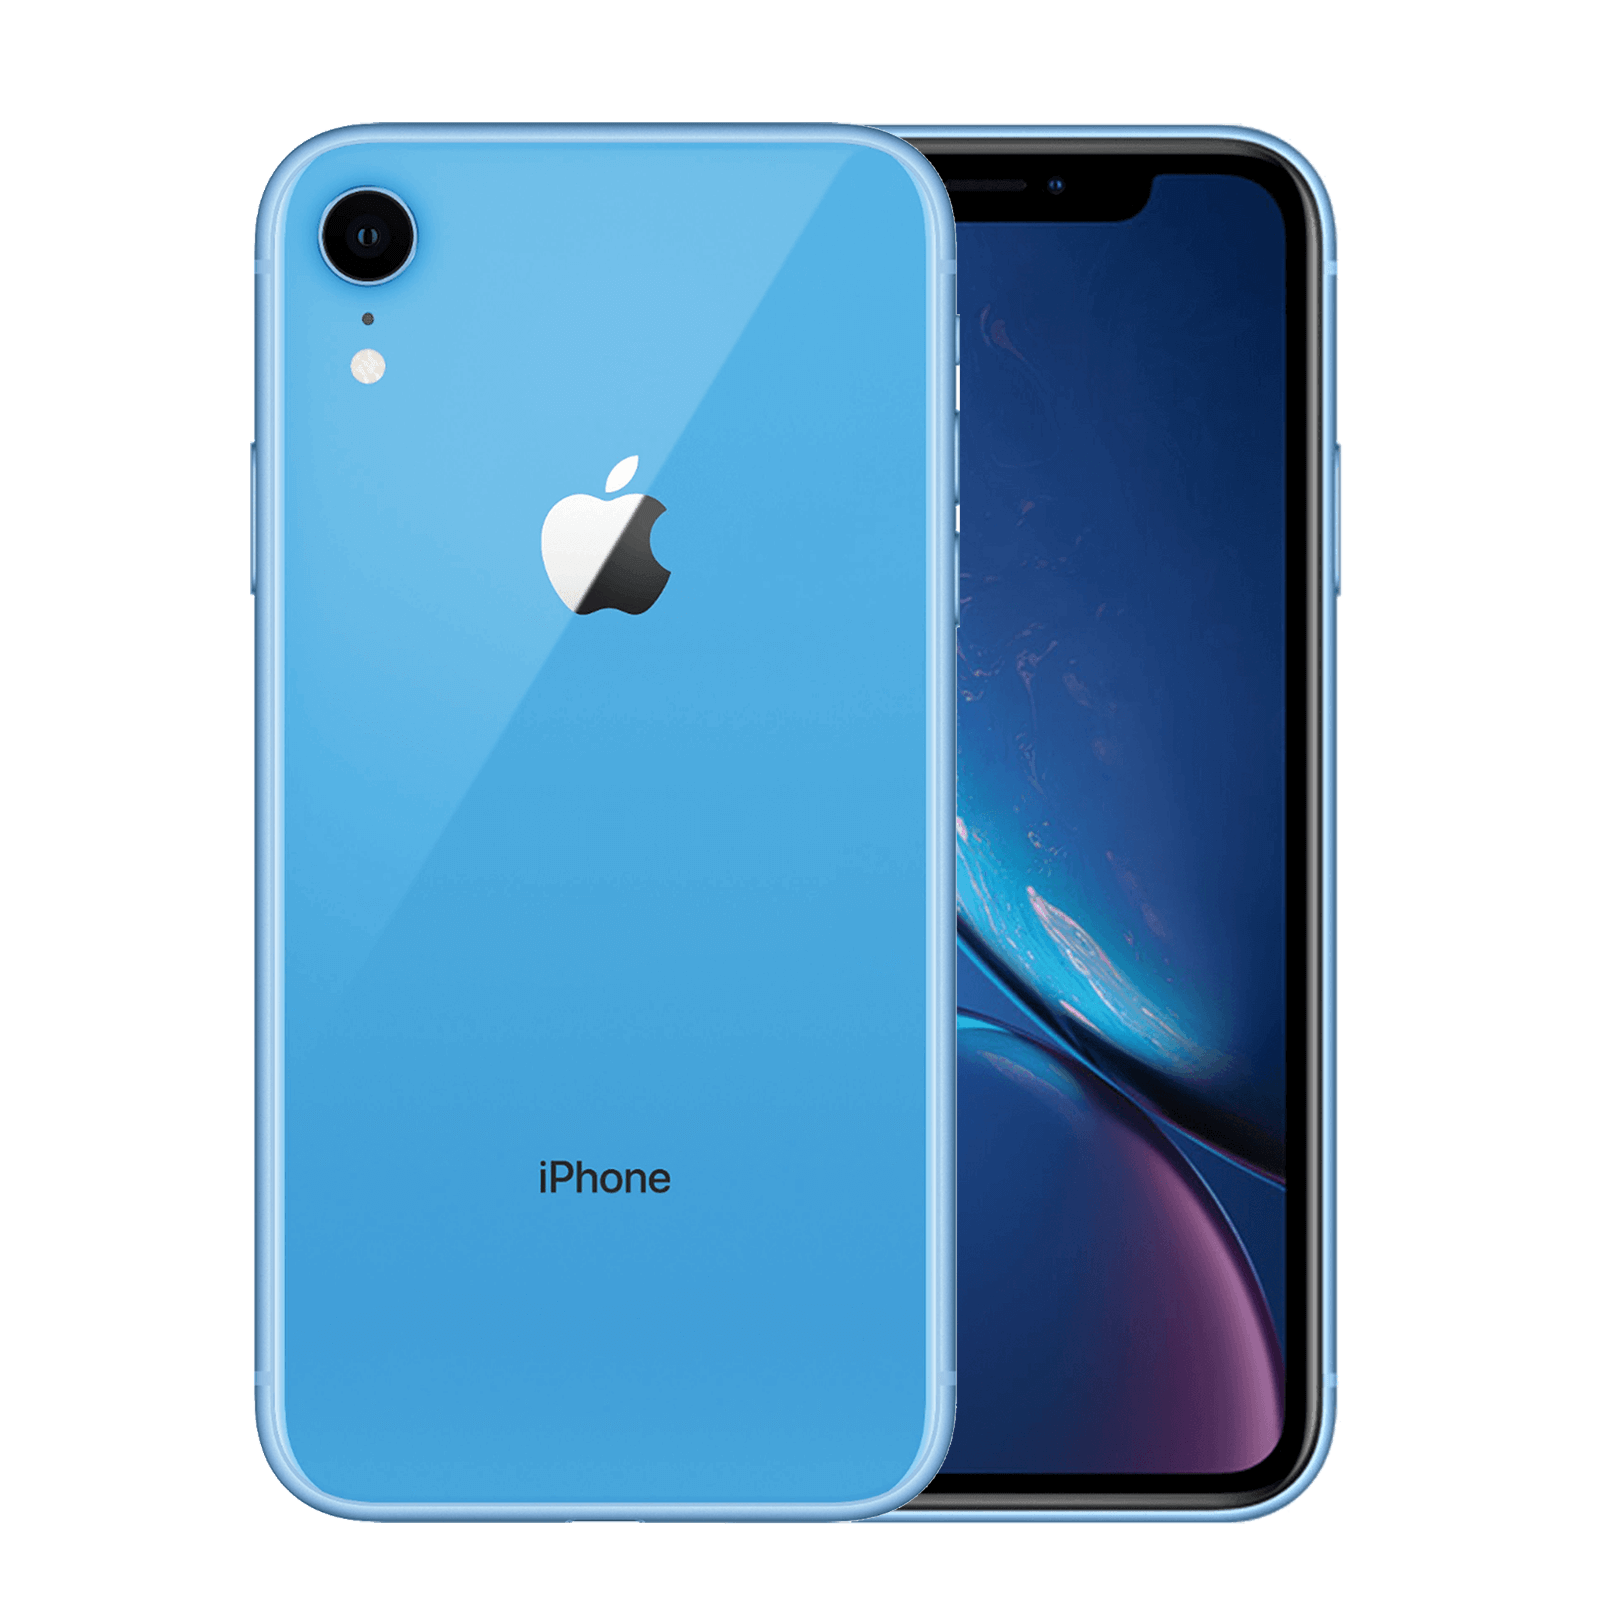 Apple iPhone XR 64GB Blue Good - Unlocked